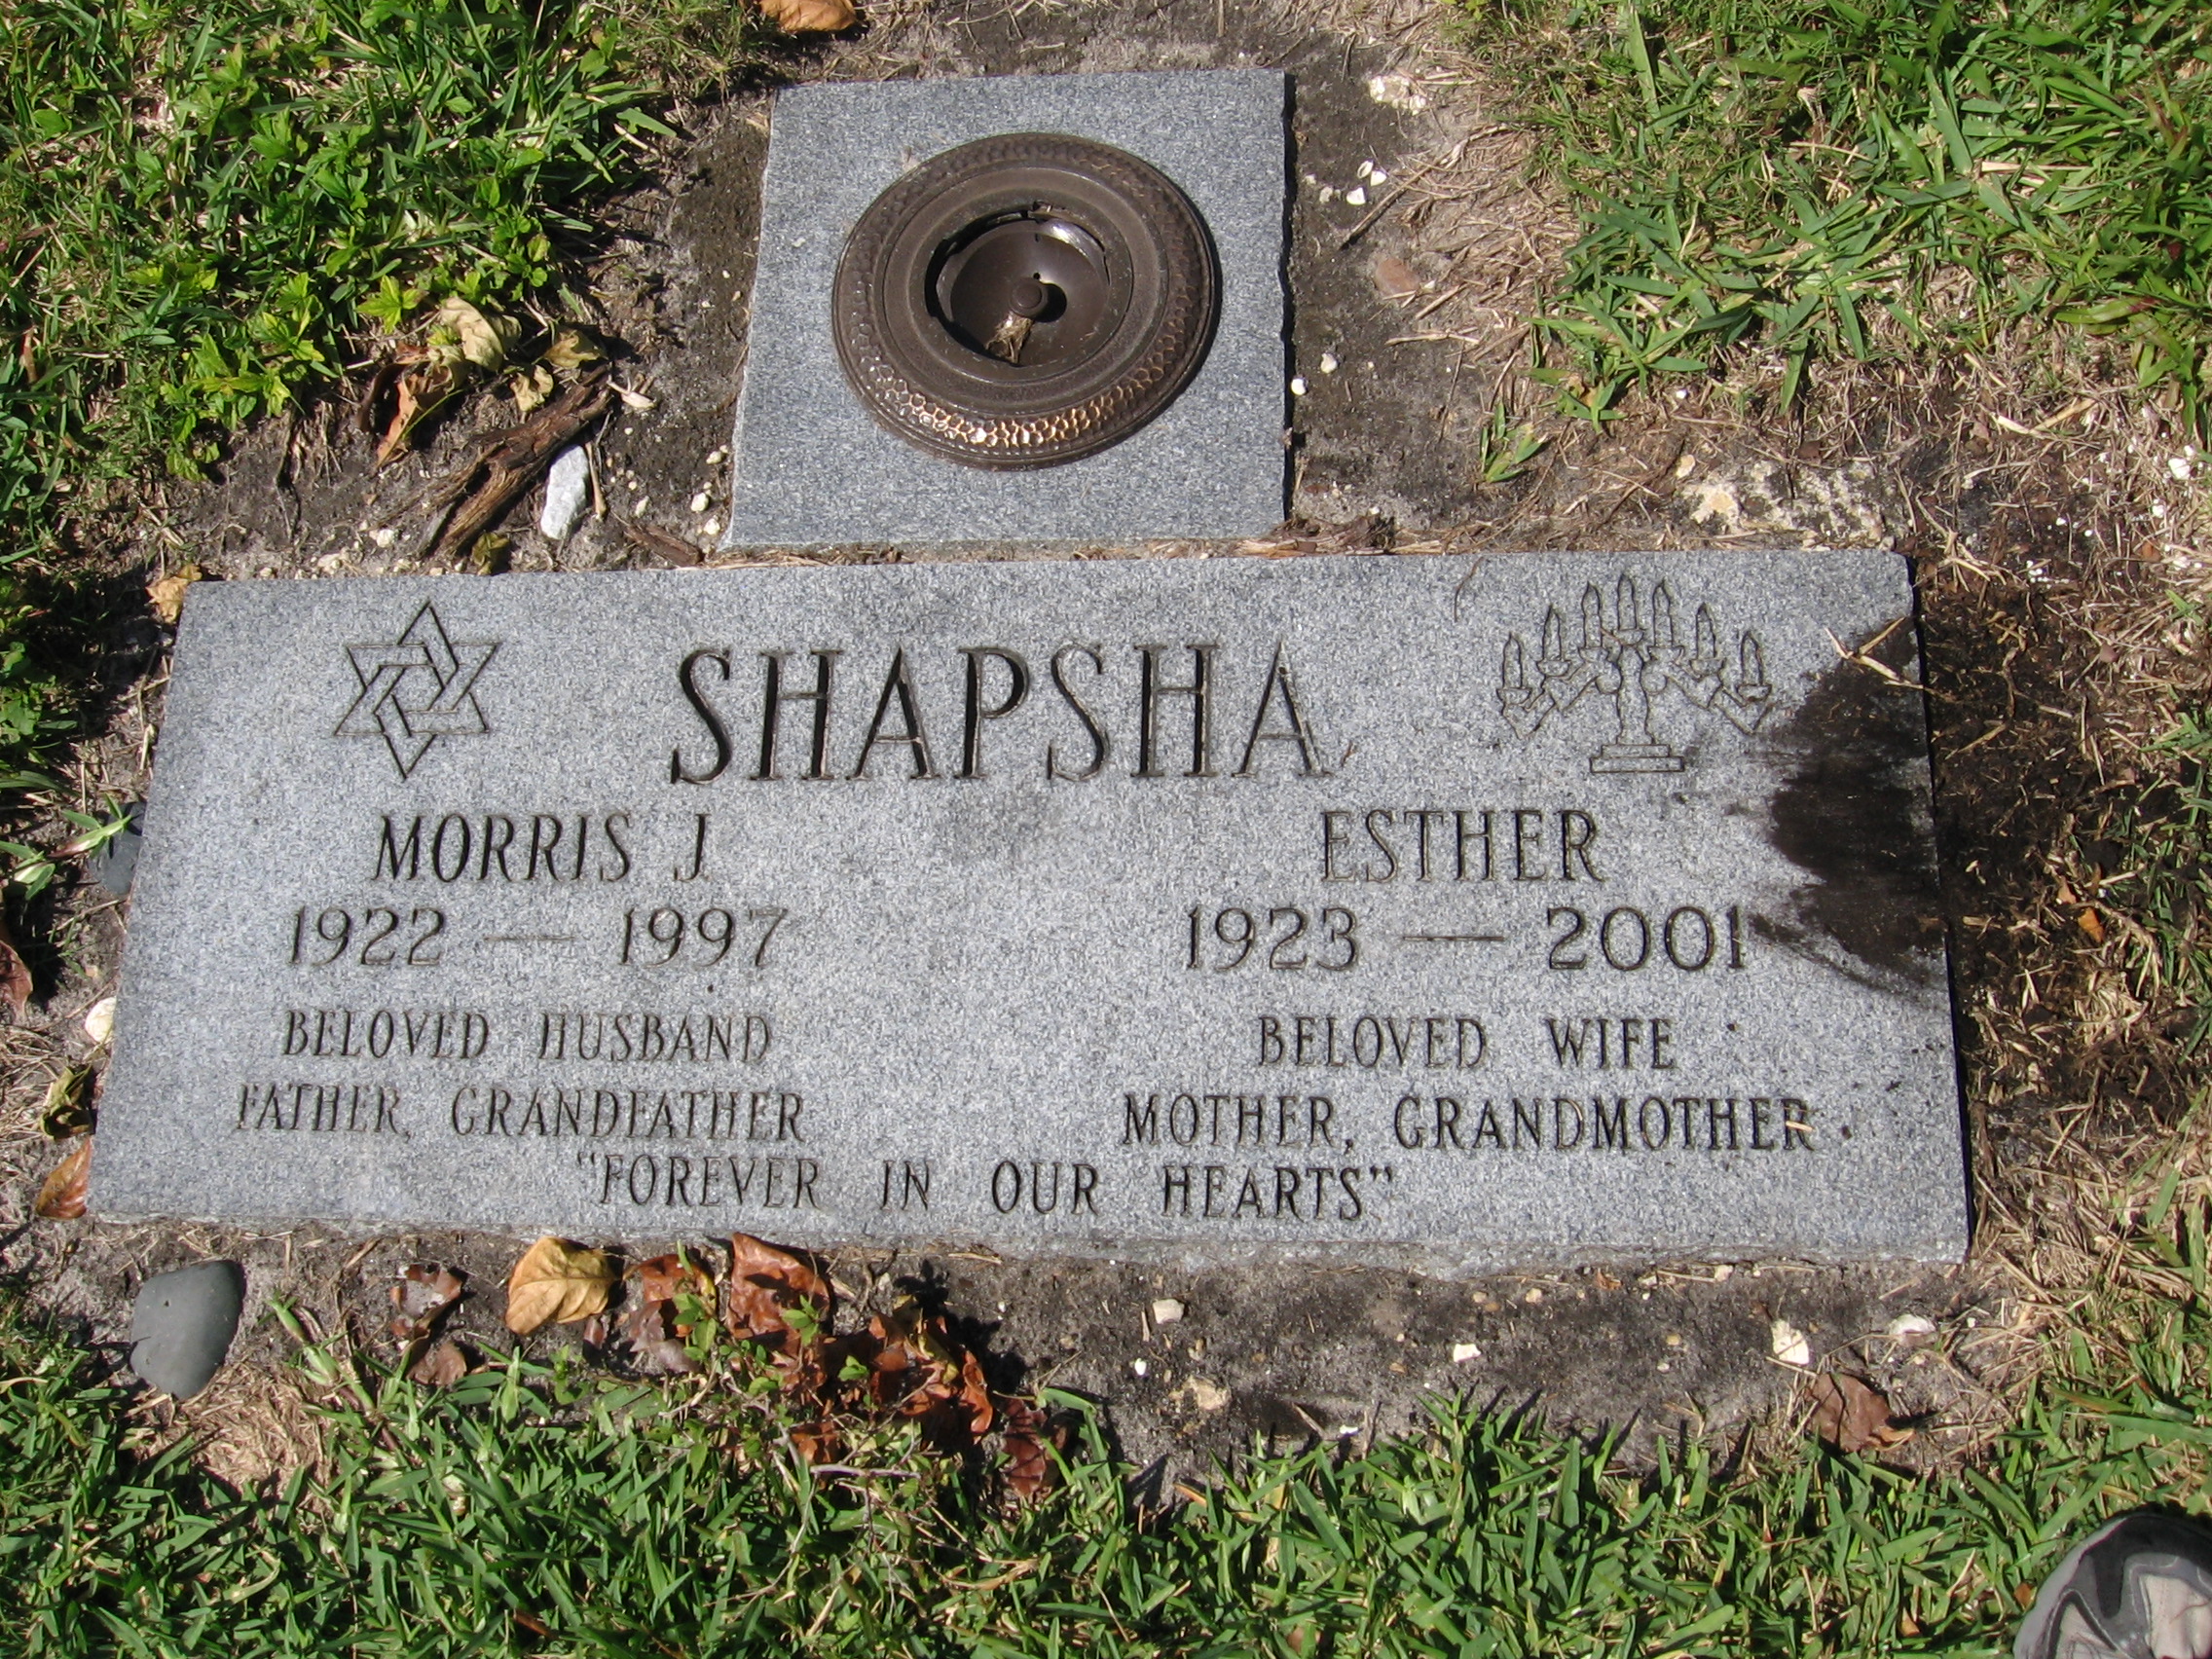 Morris J Shapsha